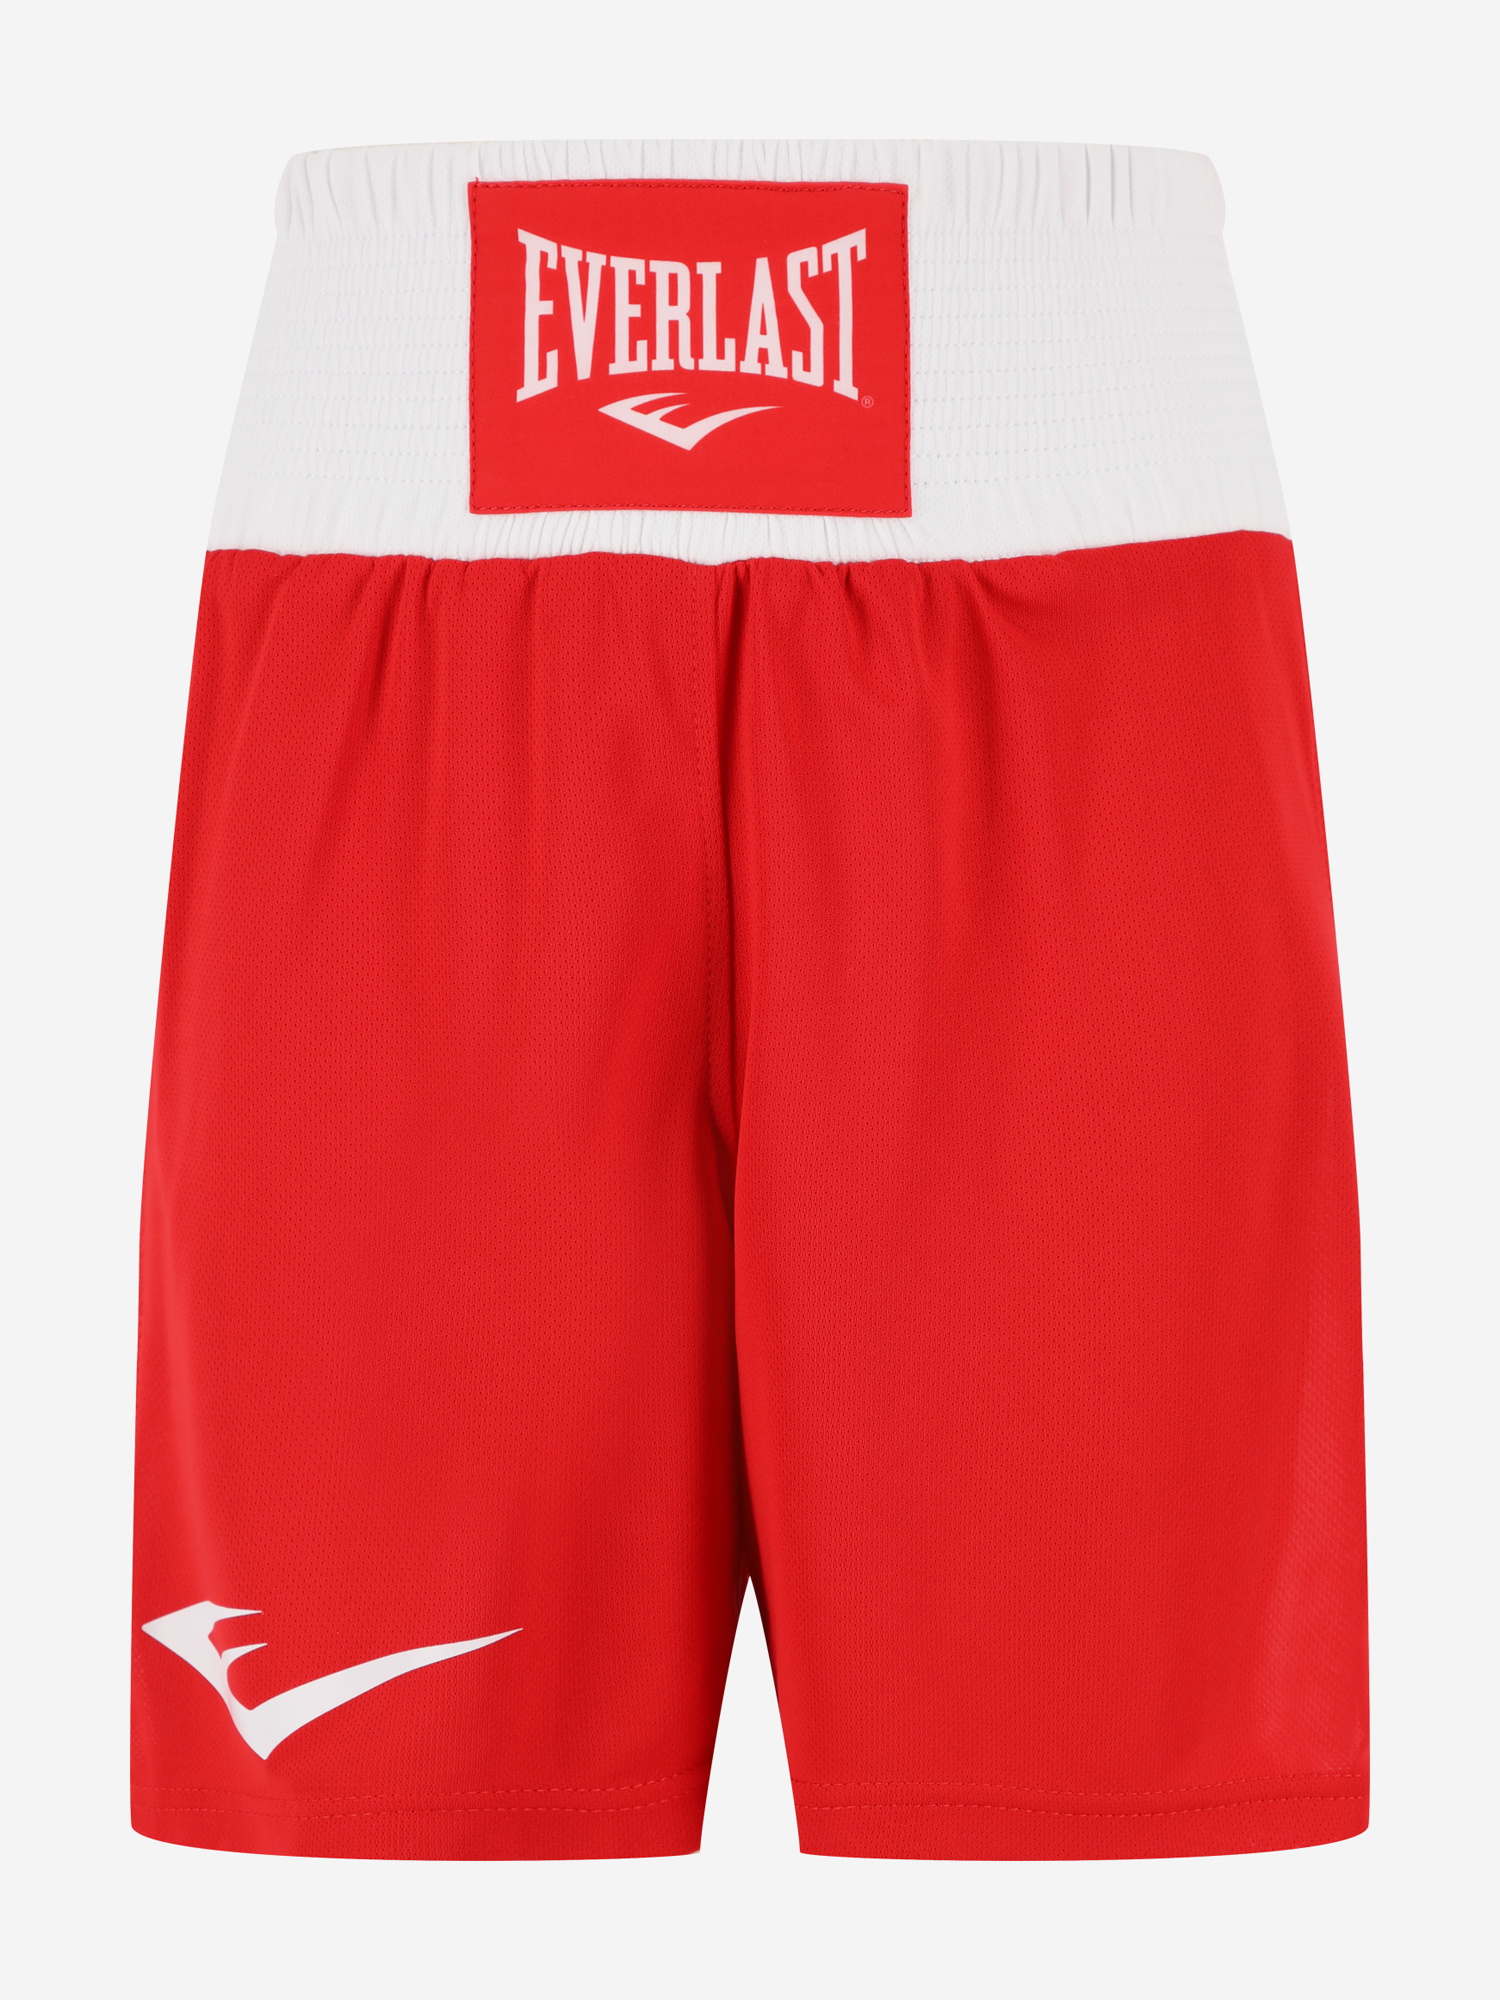 Шорты для бокса детские Everlast Elite, Красный мешок everlast vintage nevatear sh1910wb